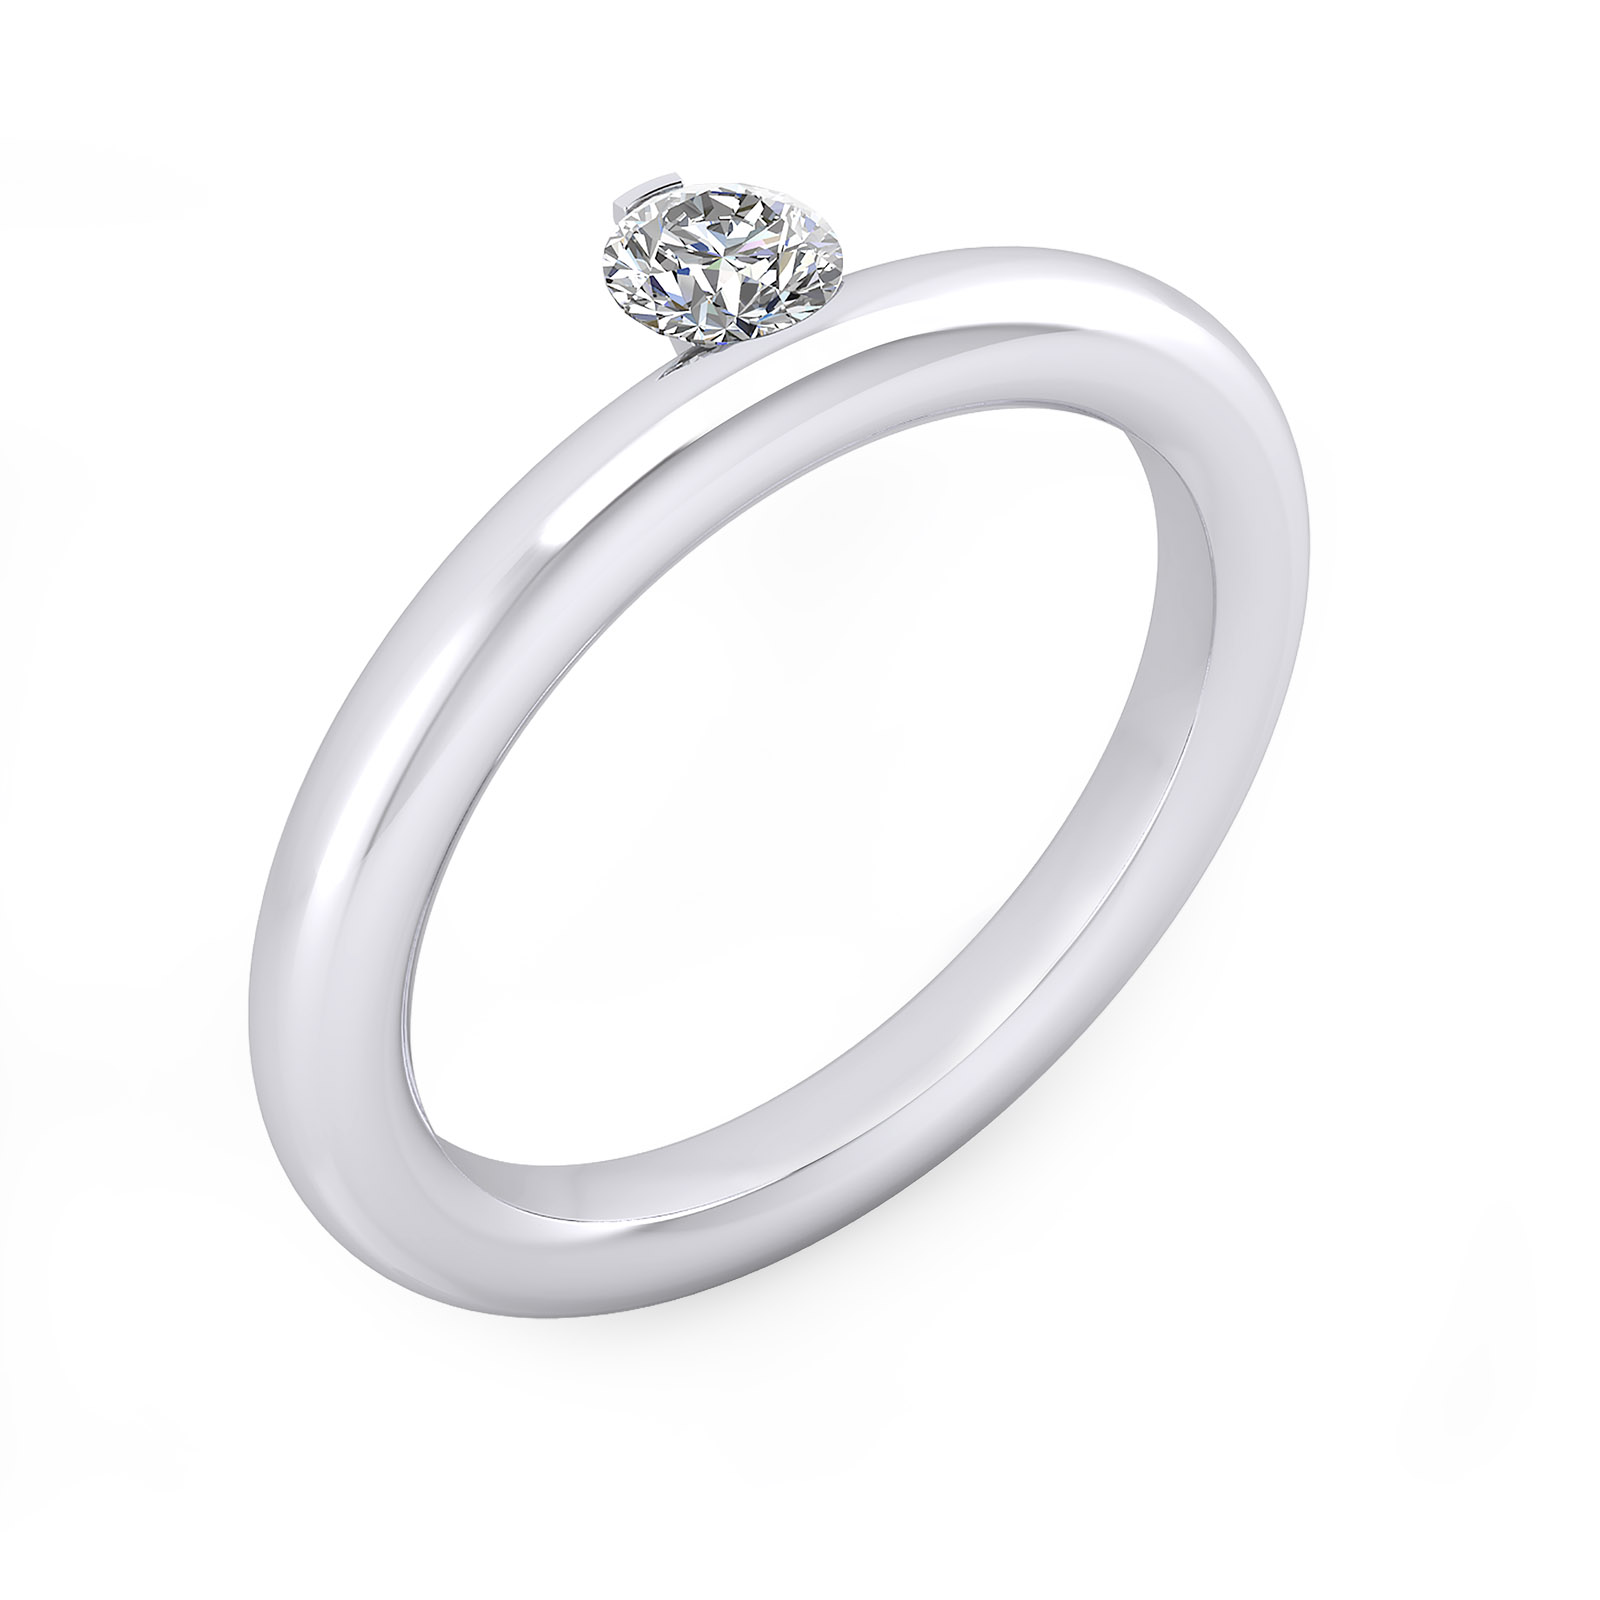 White gold engagement rings central diamond